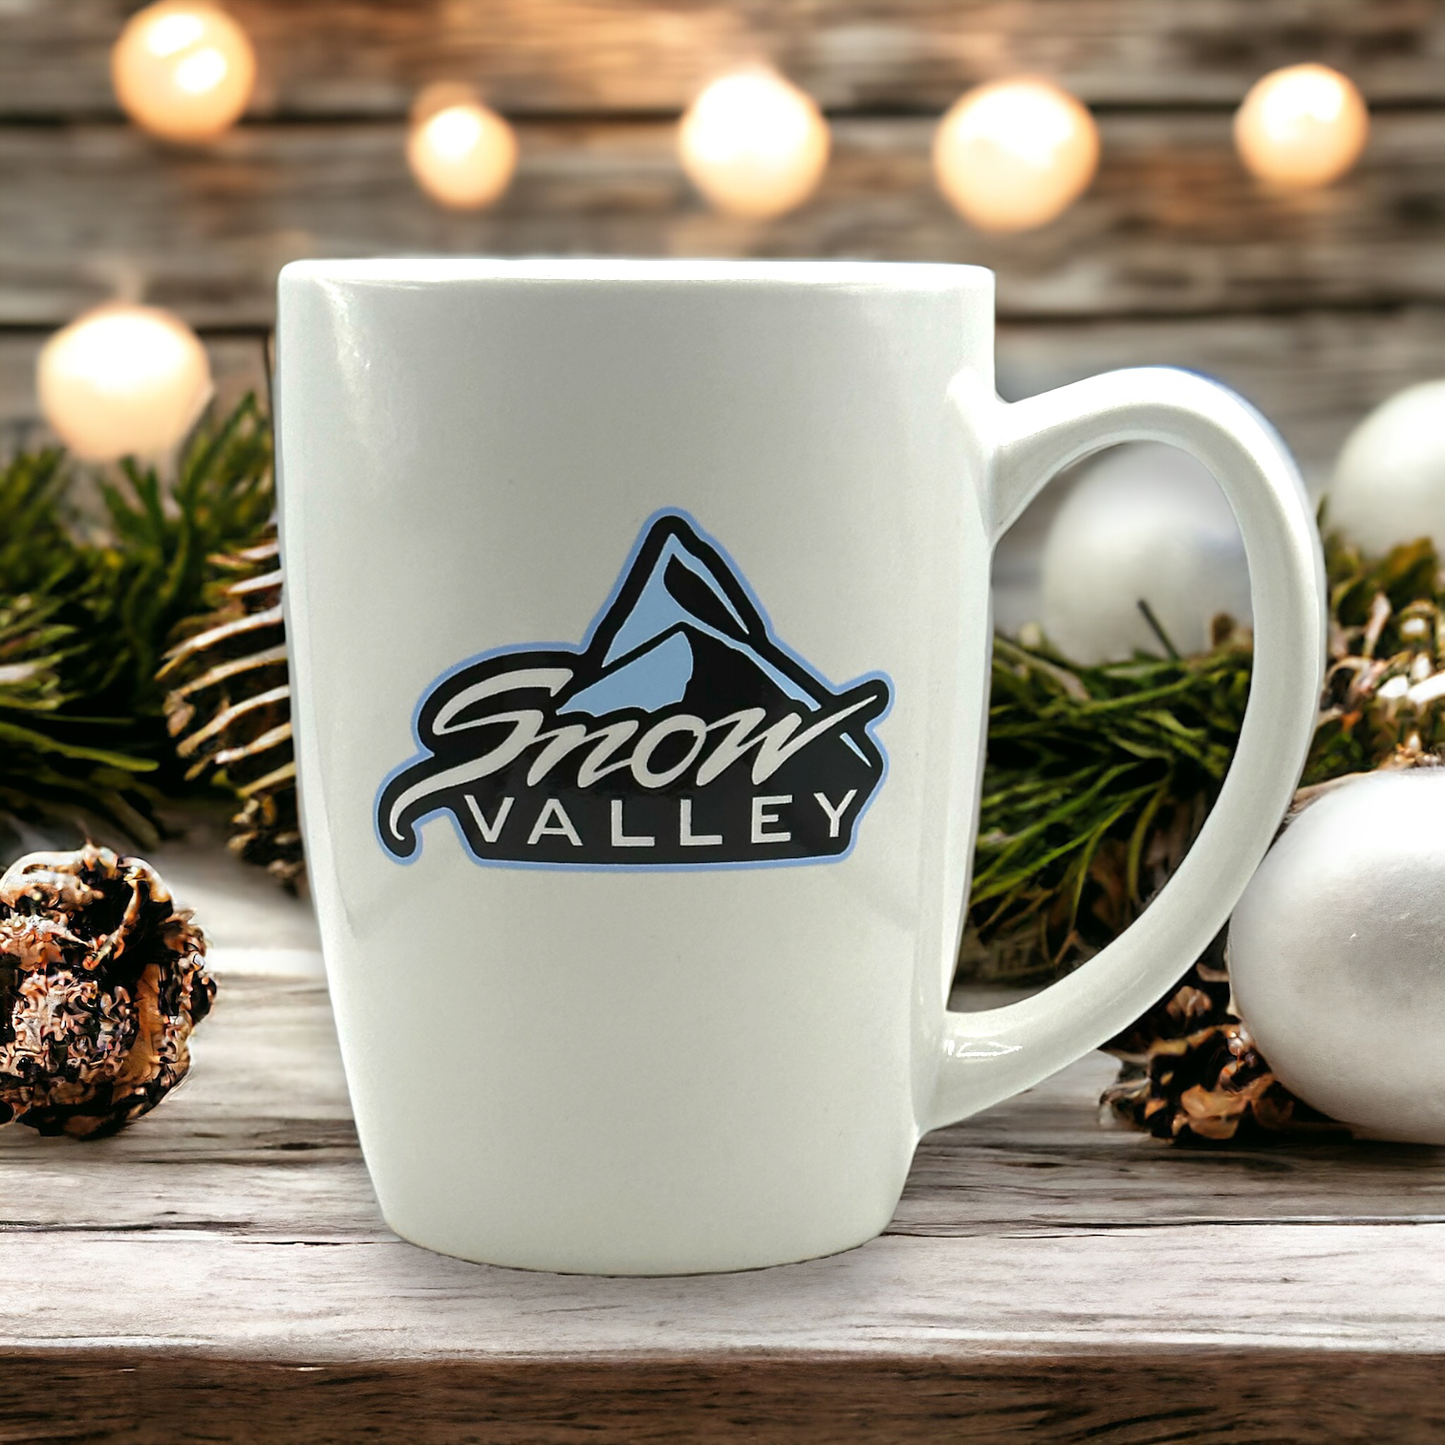 Ceramic Mug with Snow Valley Logo